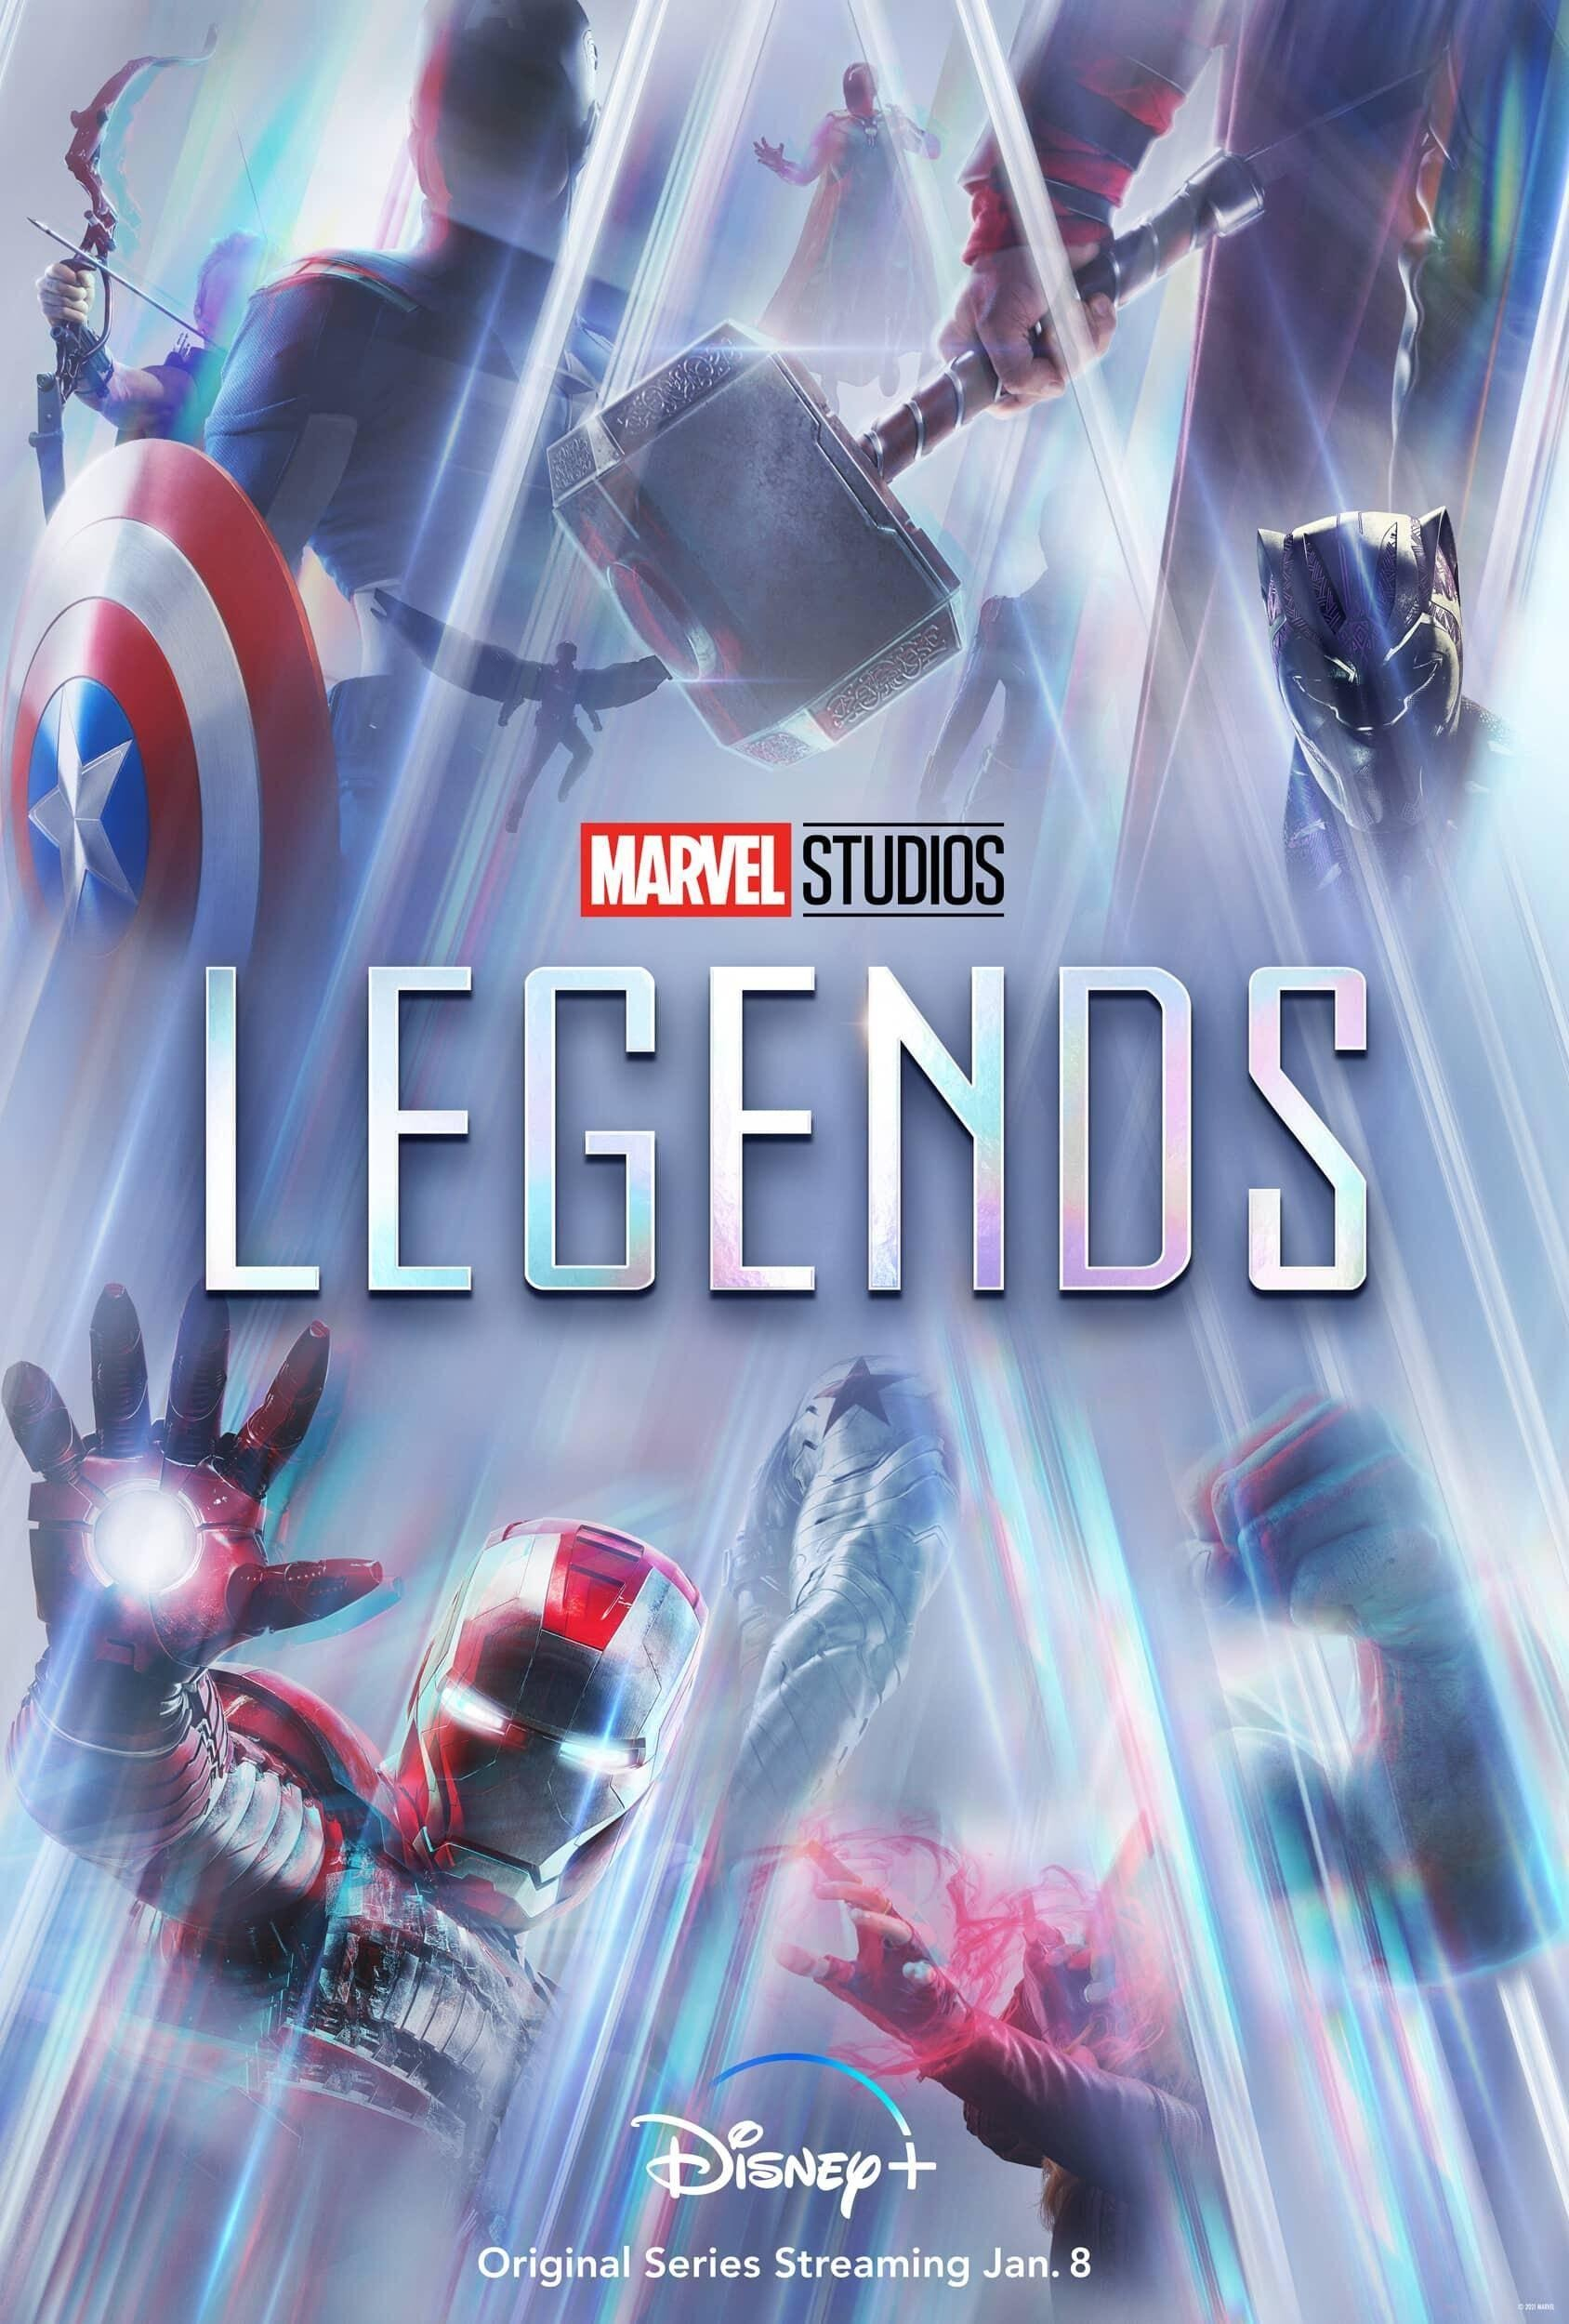 Marvel Studios Special Presentations - Wikipedia